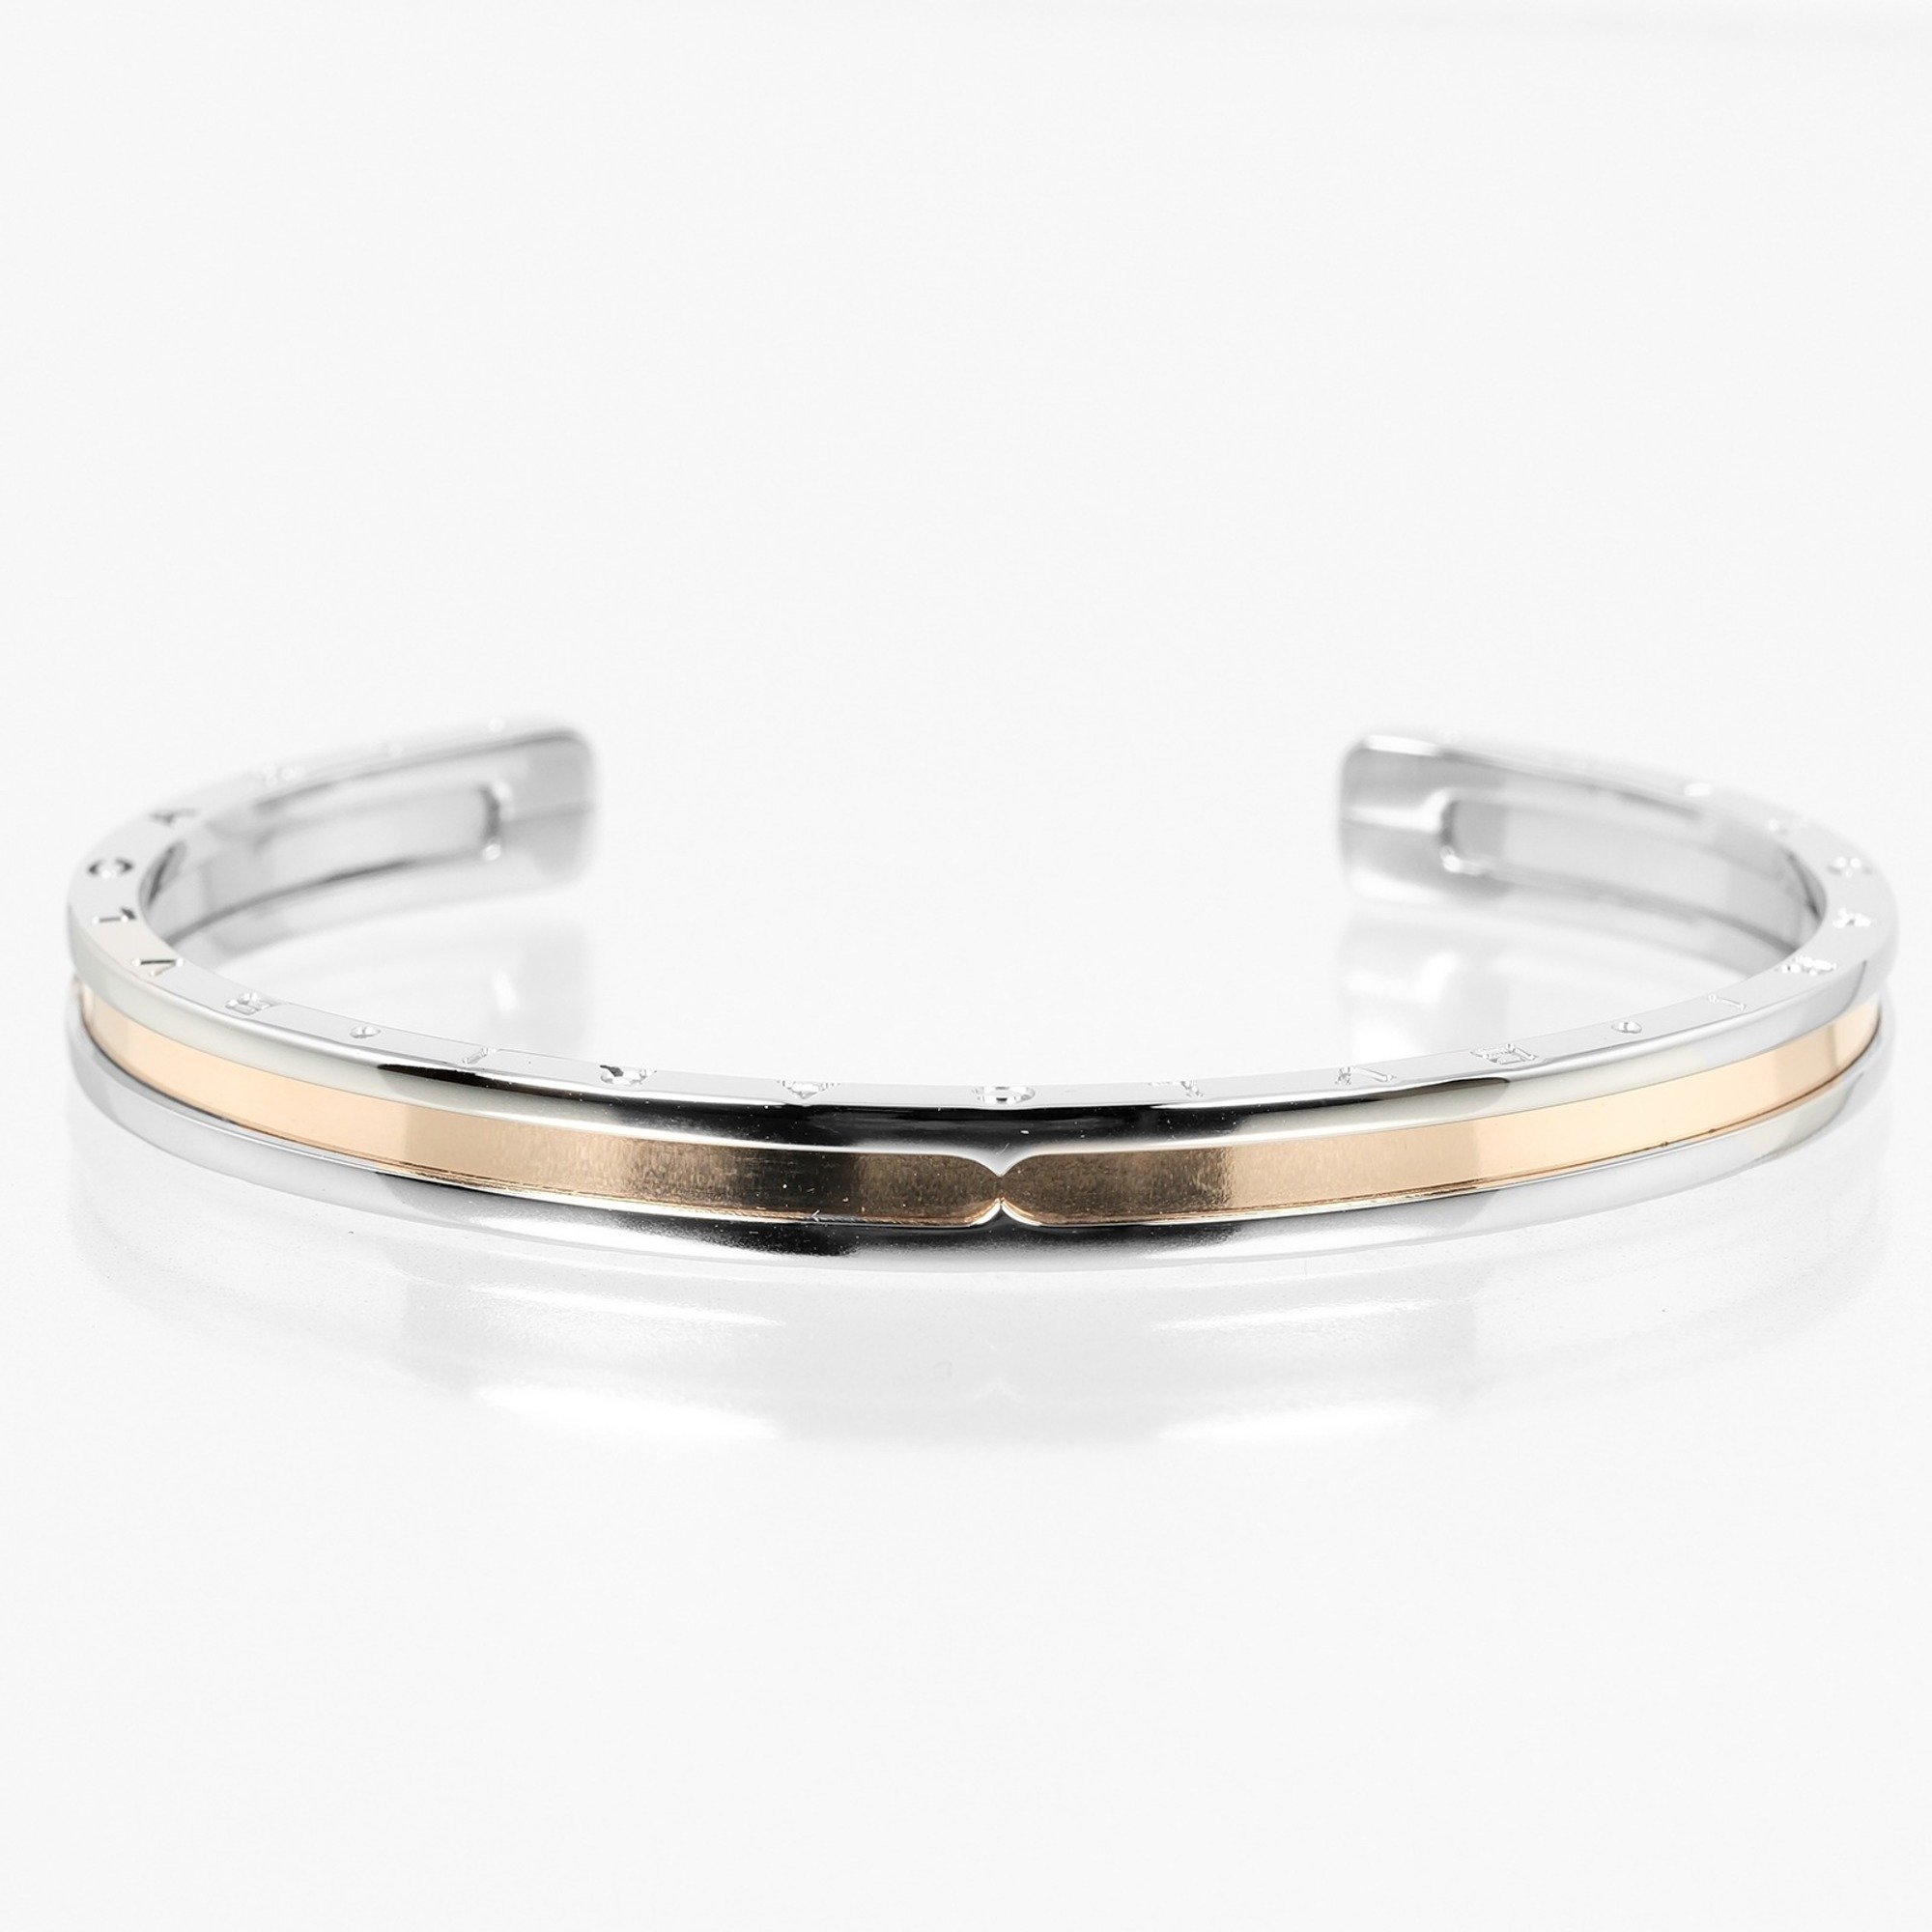 BVLGARI B.zero1 SM Bracelet, wrist size 15.5cm, K18PG, pink gold, stainless steel, approx. 12.35g